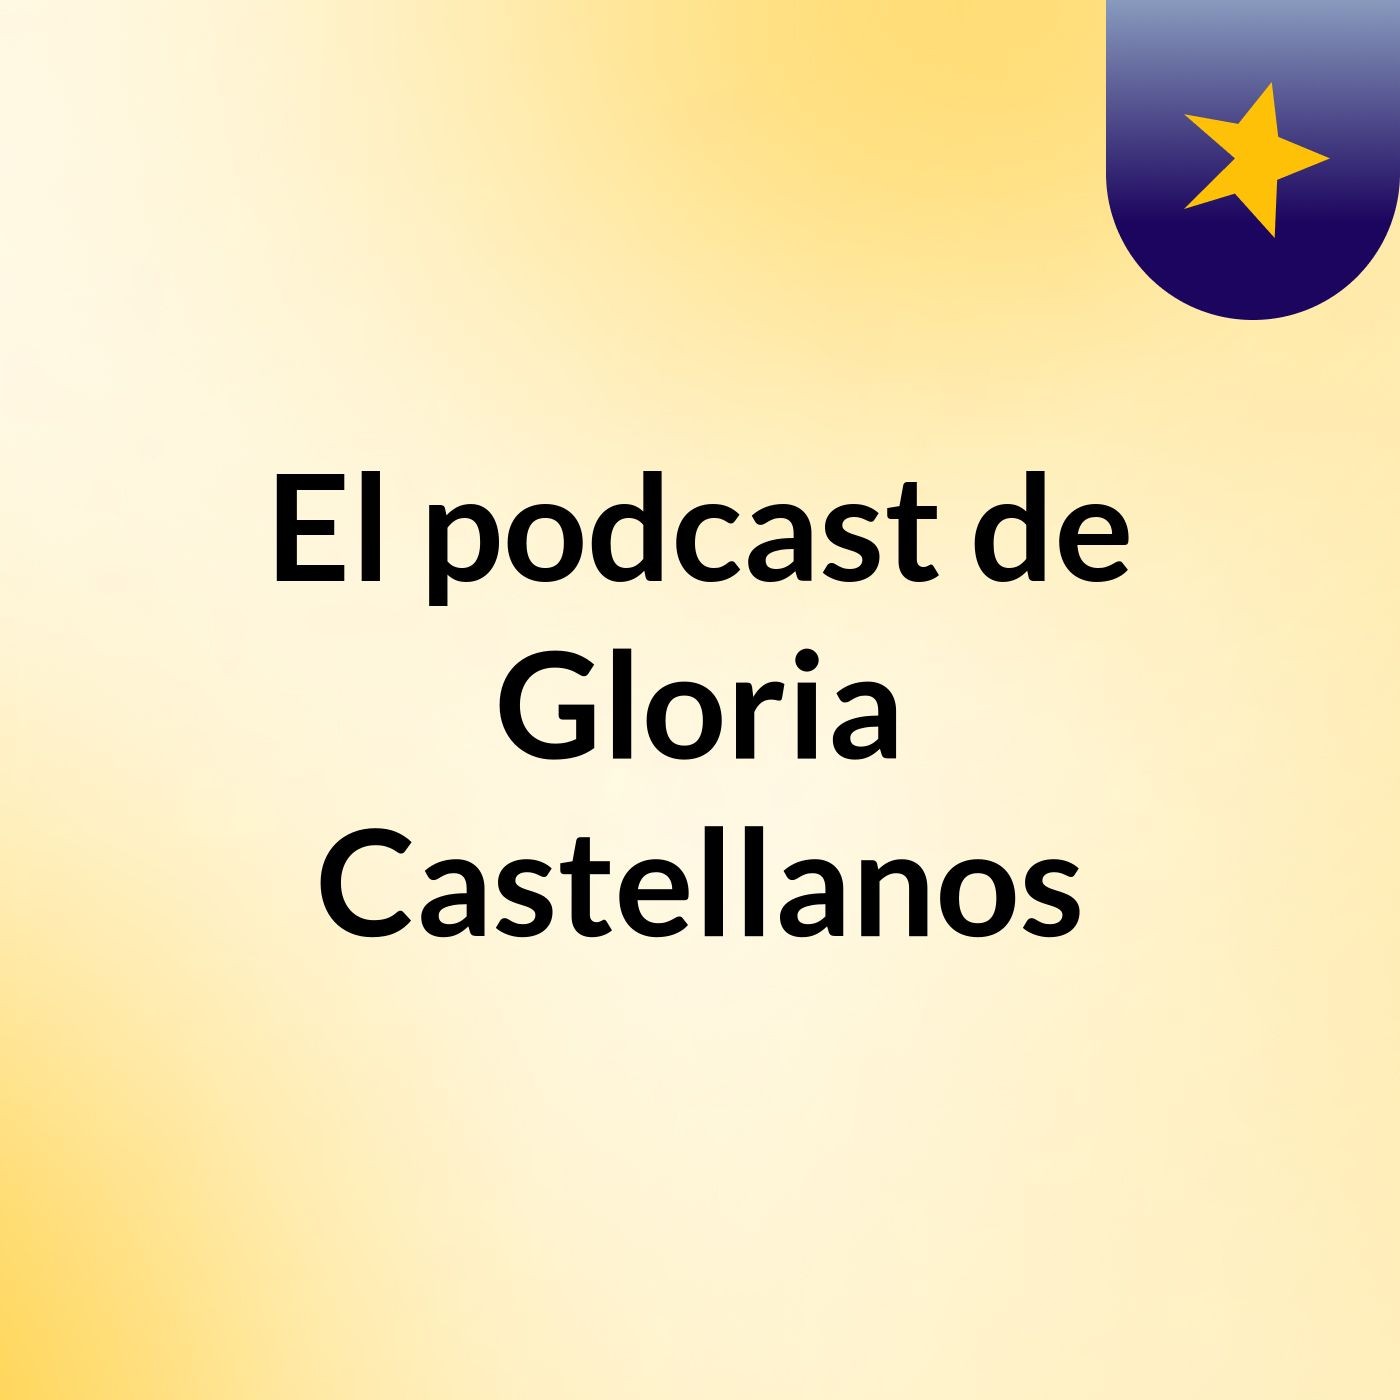 El podcast de Gloria Castellanos